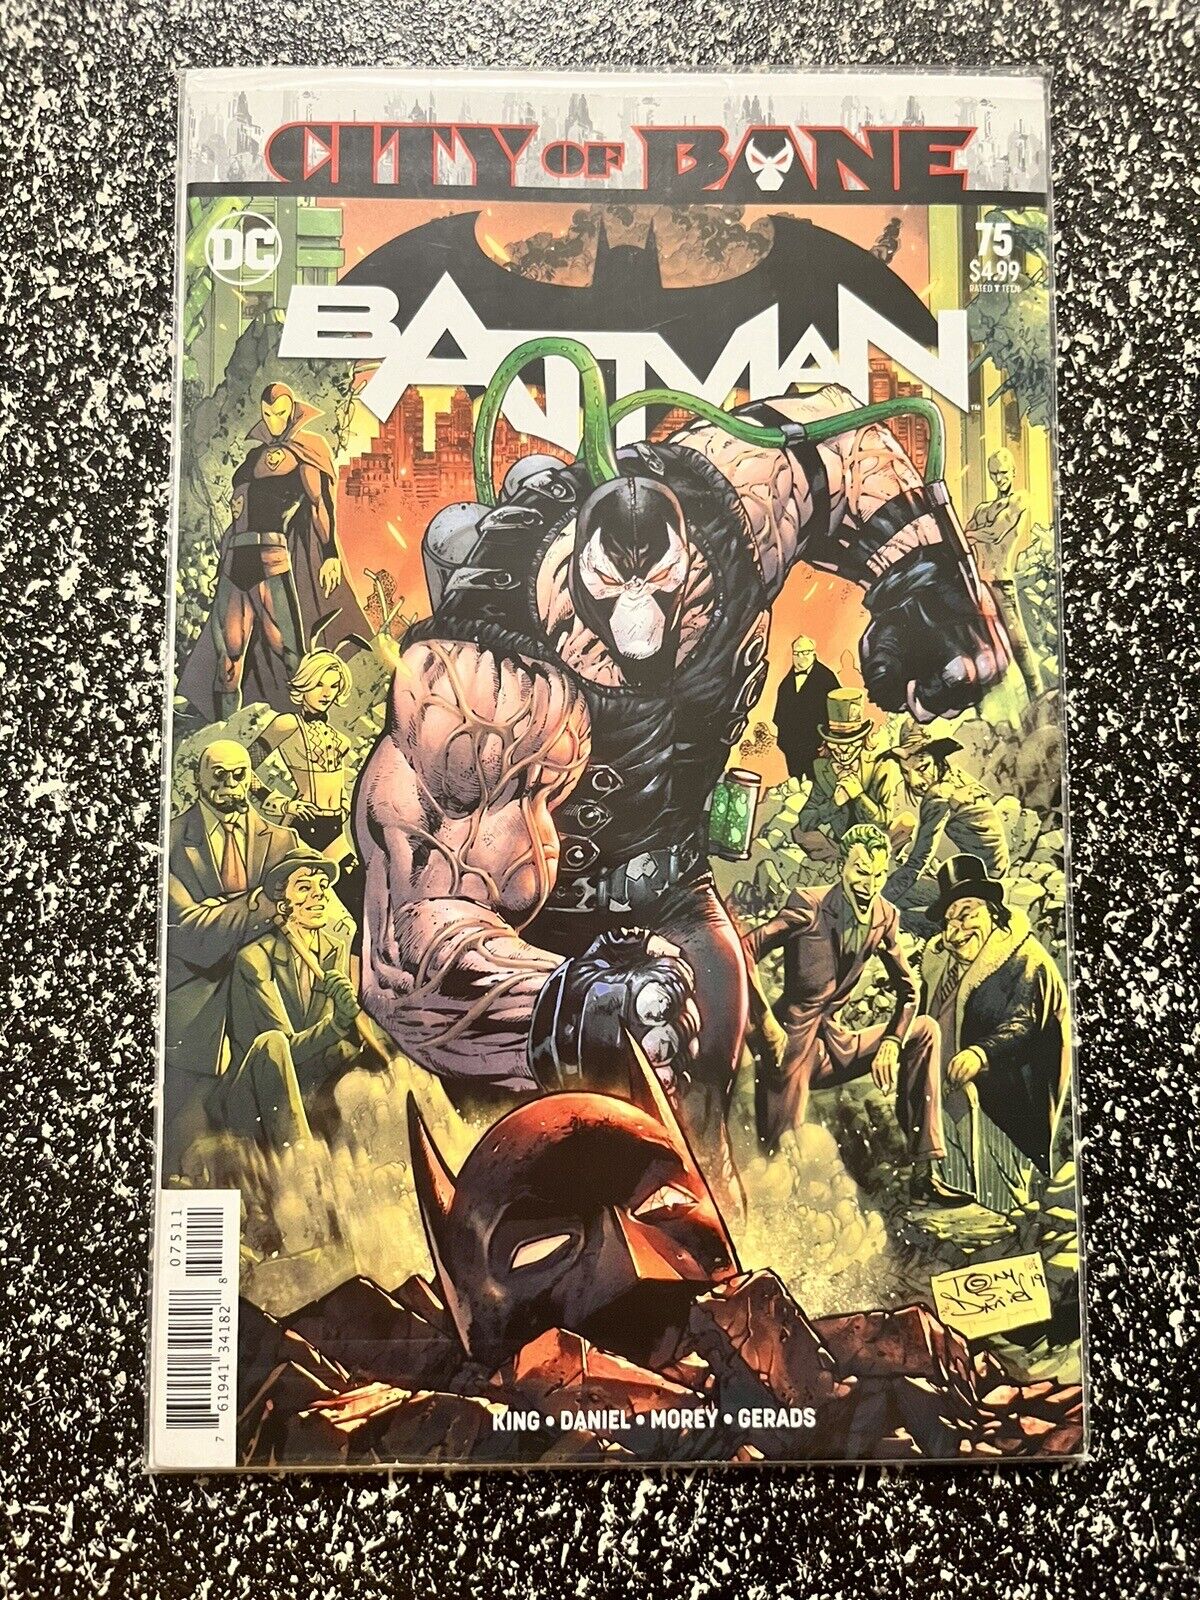 Batman #75 (DC Comics Late September 2019) - City Of Bane